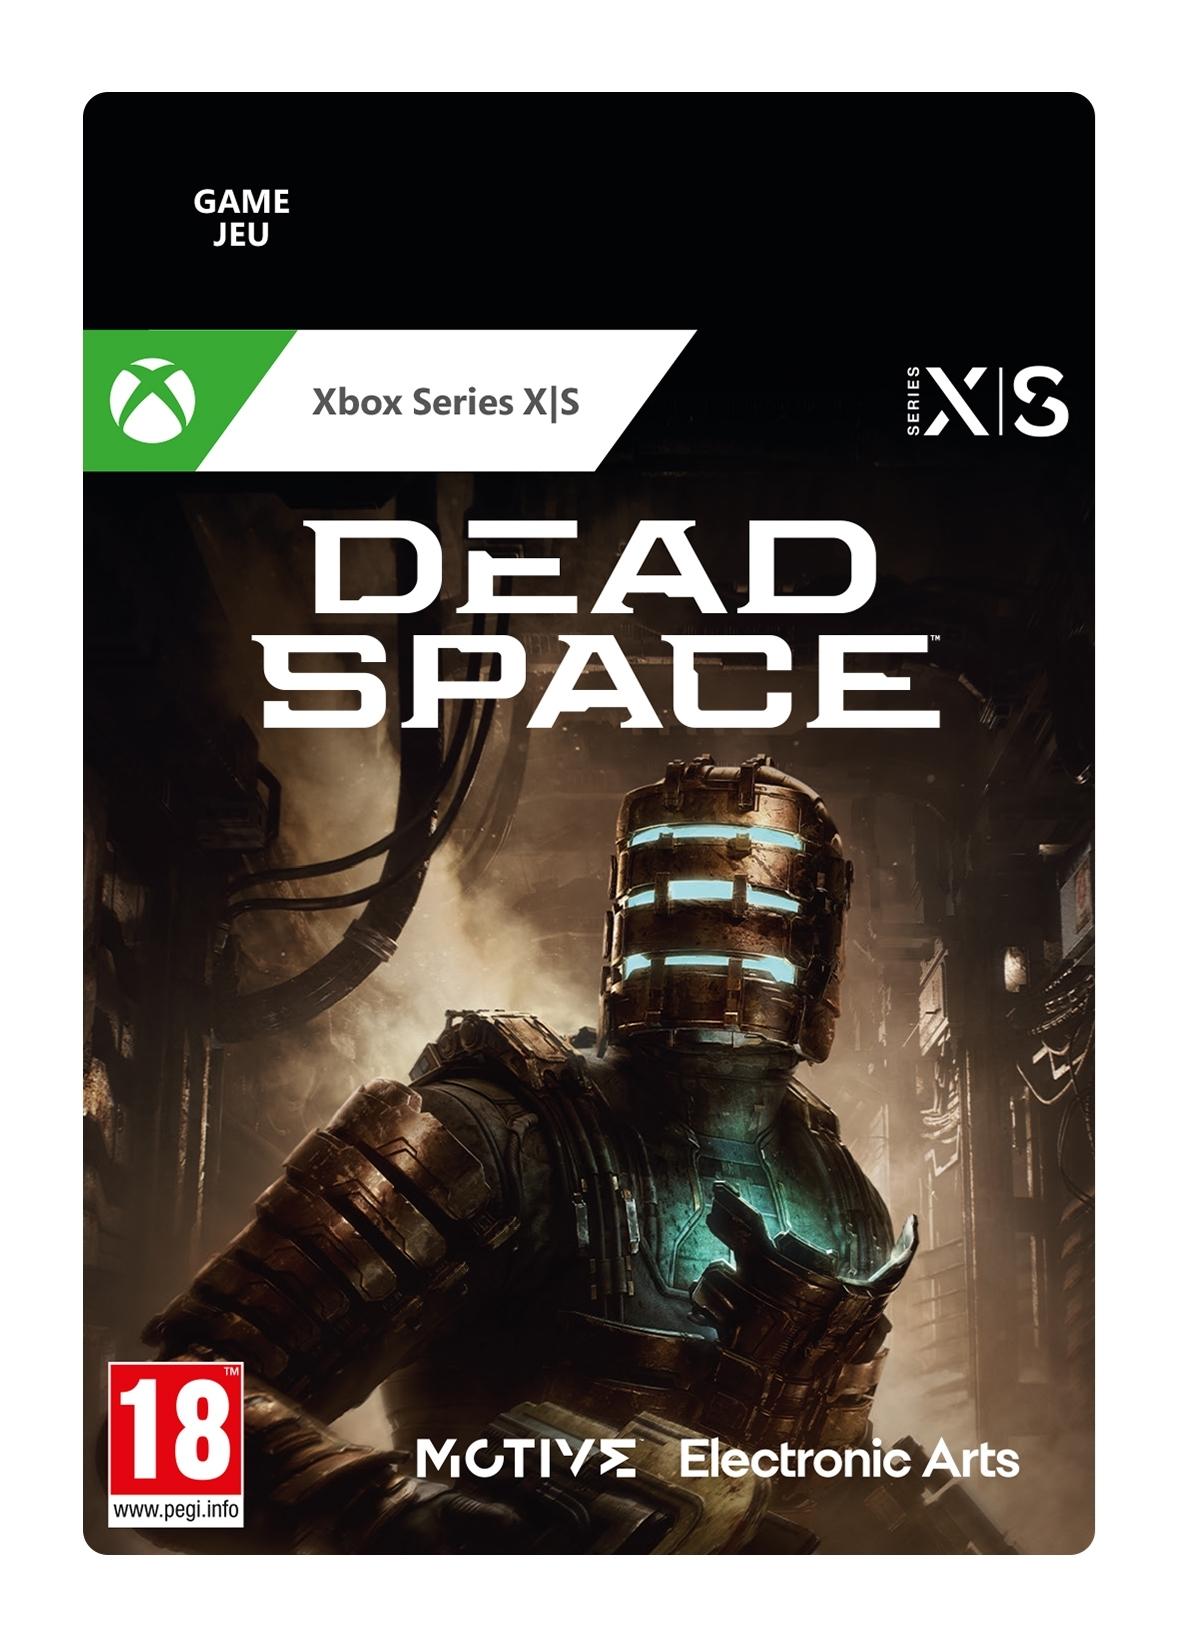 Dead Space: Standard Edition - Xbox Series X - Game | G3Q-01463 (818c8550-07af-8f4d-b0c4-47685a9696b2)